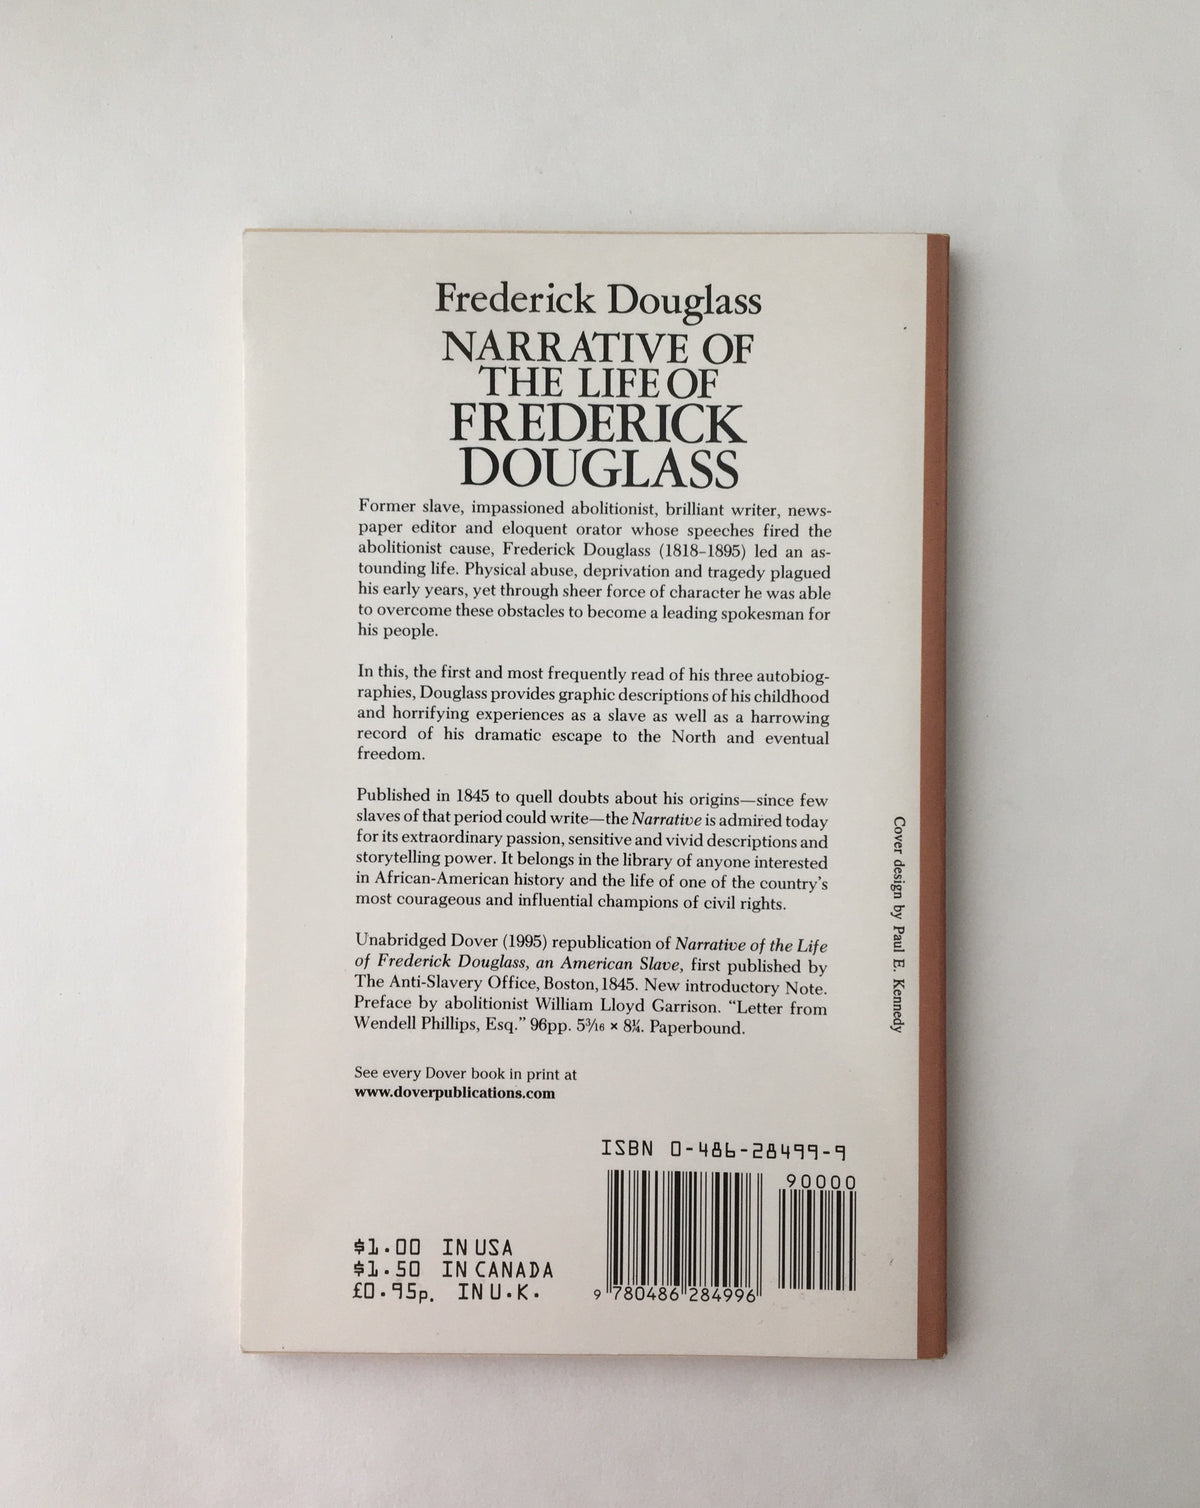 DONATE: Narrative of the Life of Frederick Douglass by Frederick Douglass